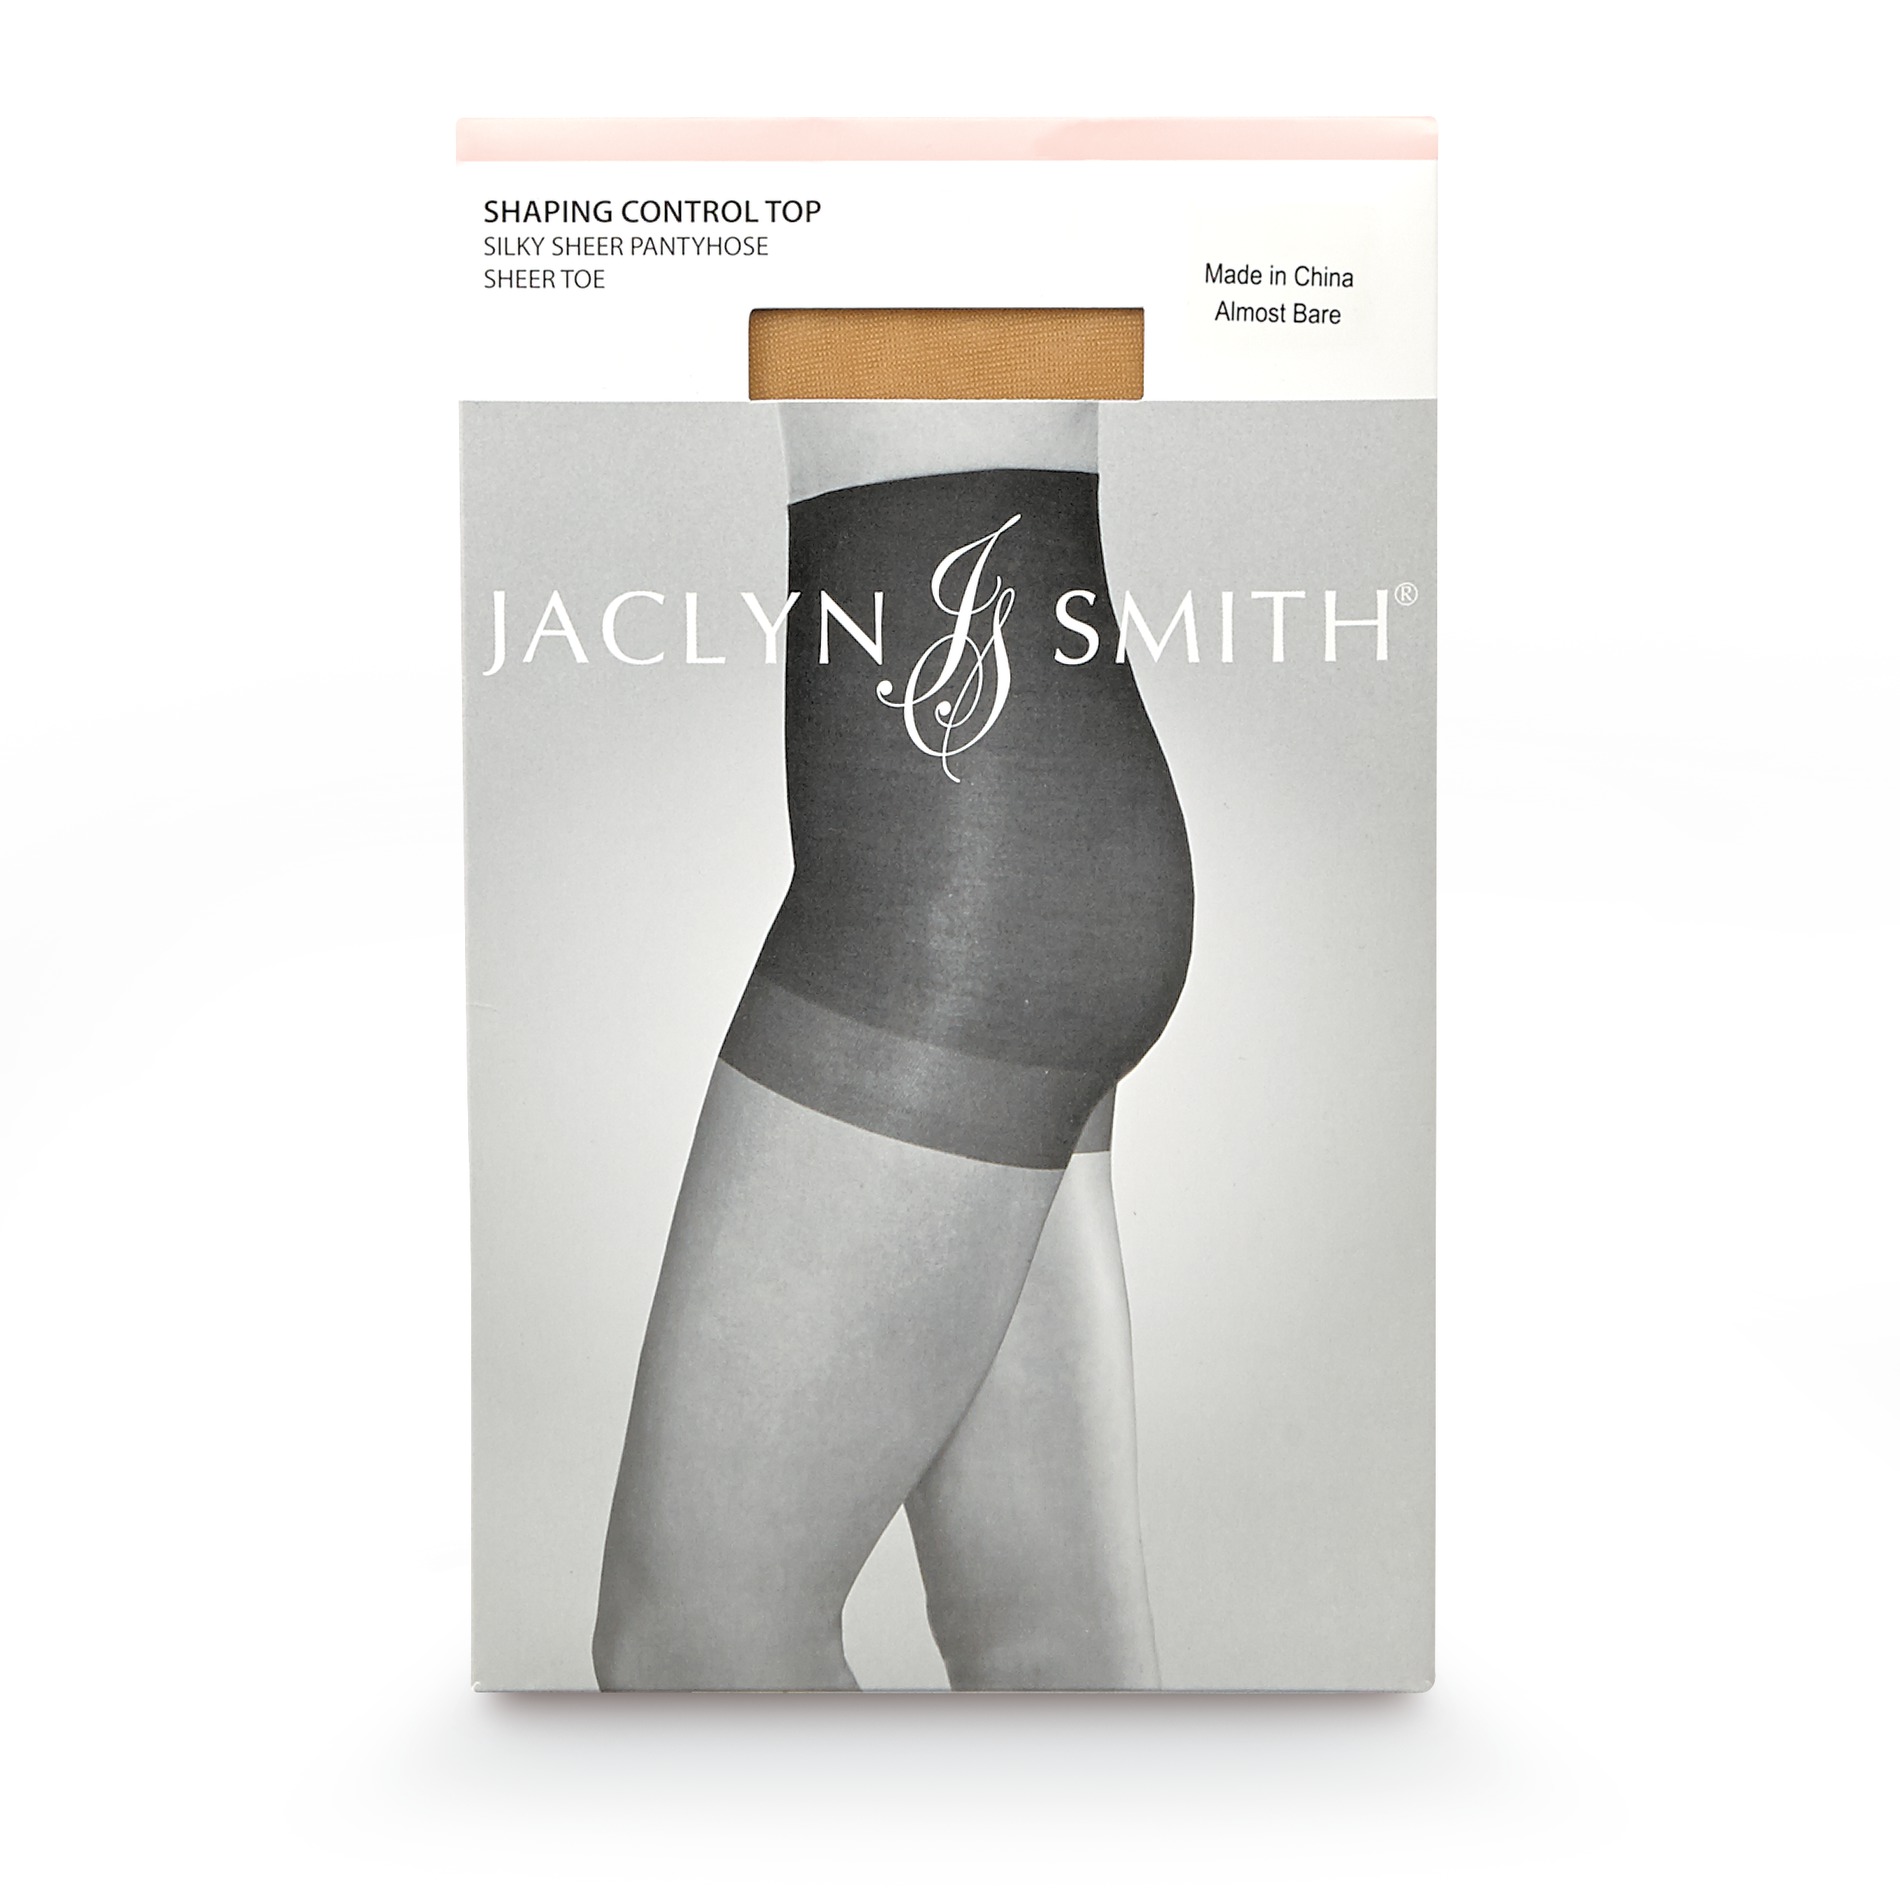 Jaclyn Smith Women's 1-Pair Control Top Pantyhose